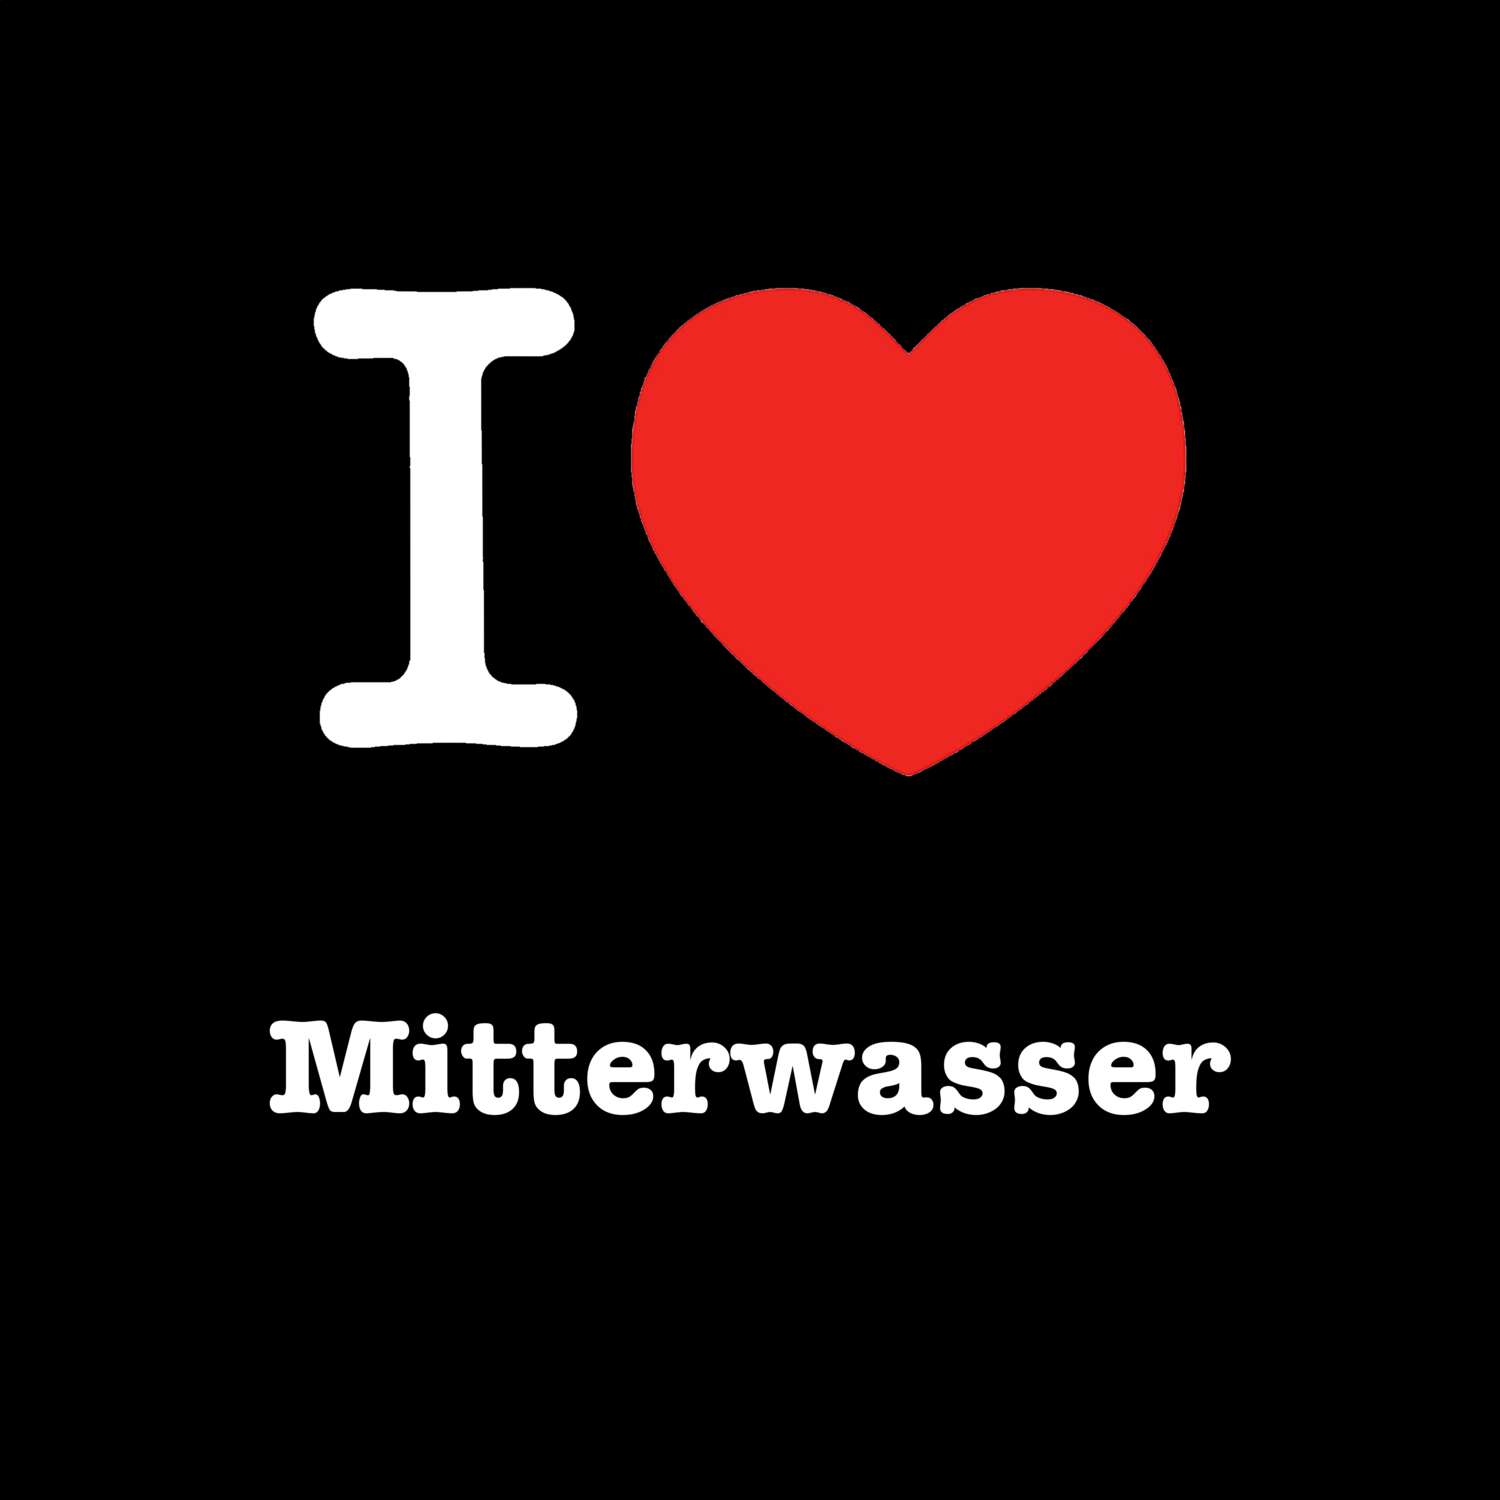 Mitterwasser T-Shirt »I love«